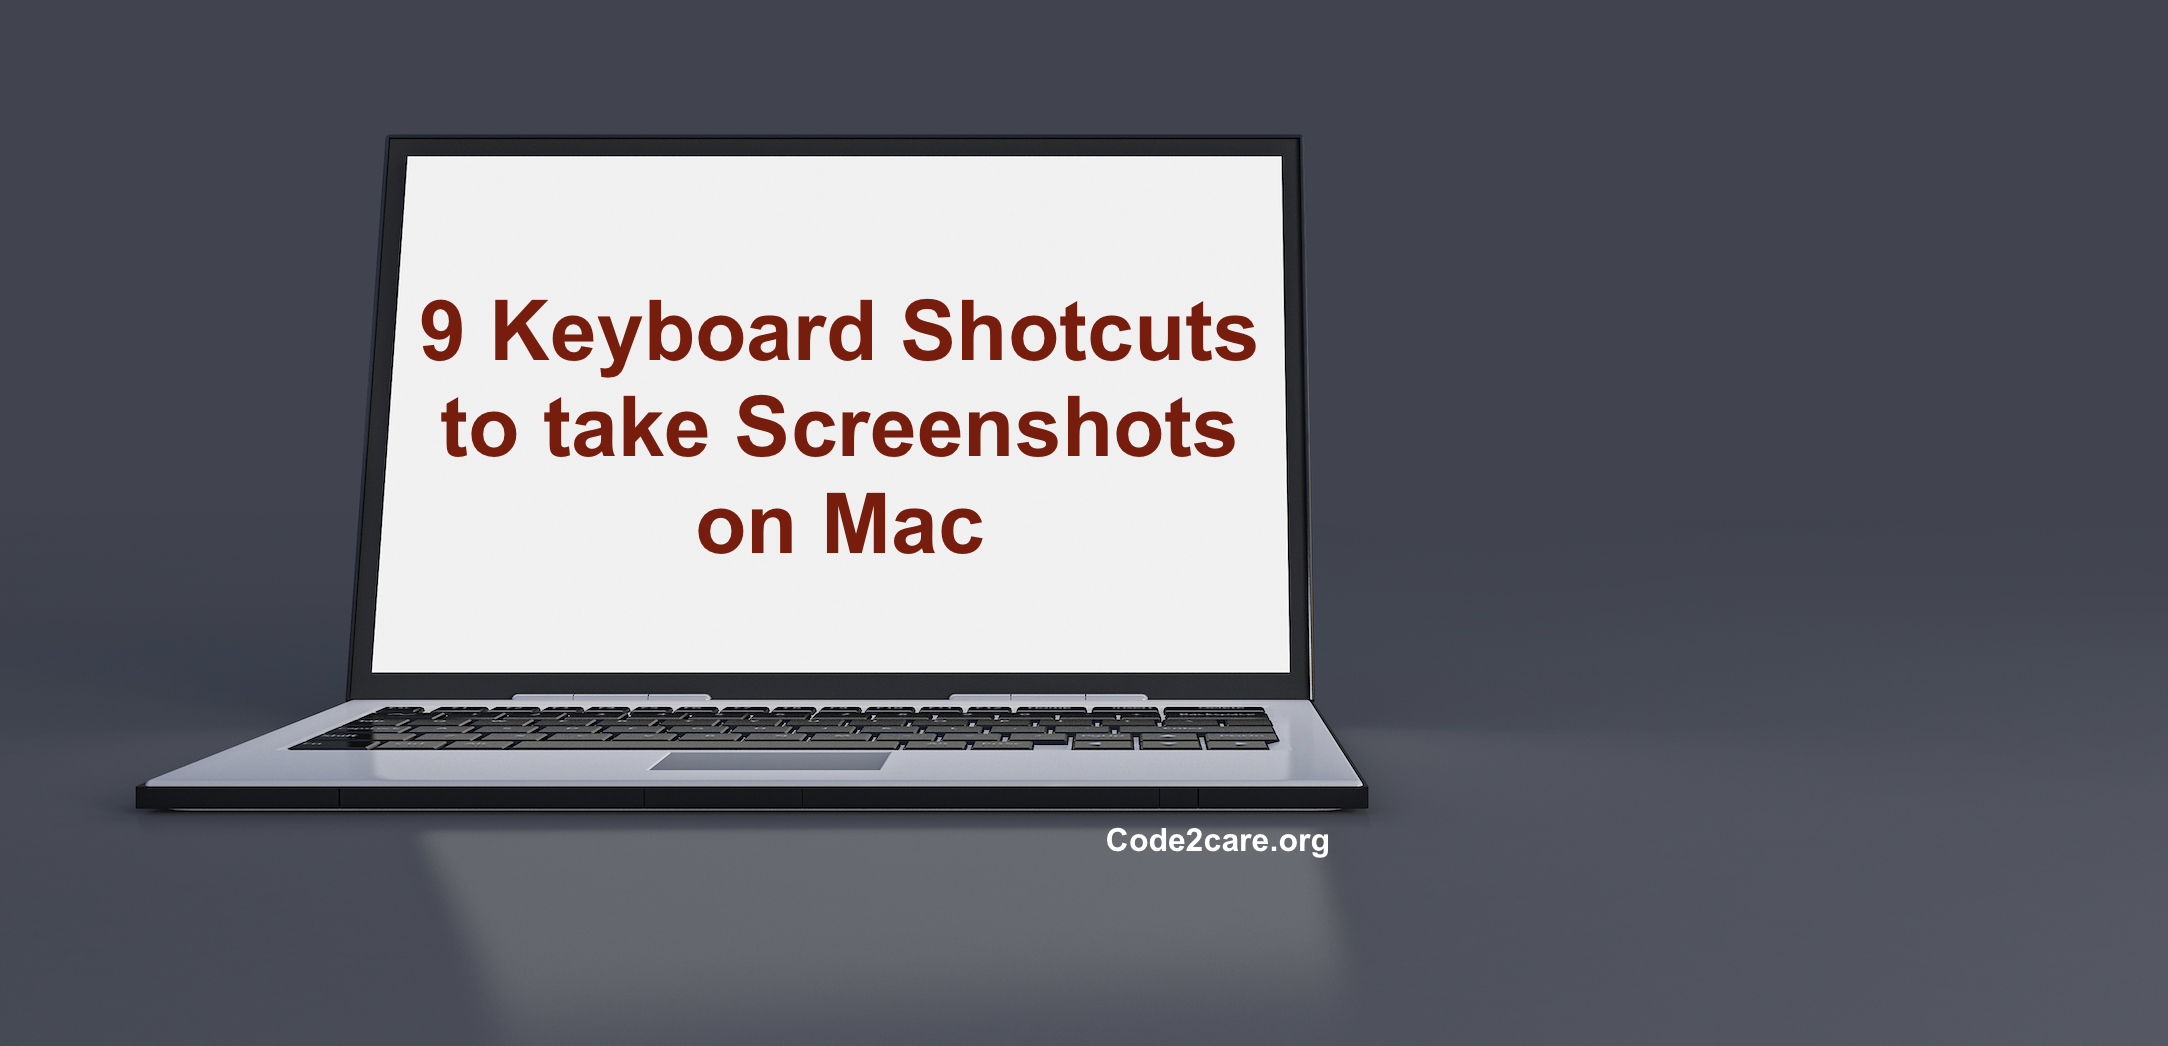 9 Keyboard Shotcuts to take Screenshots on Mac